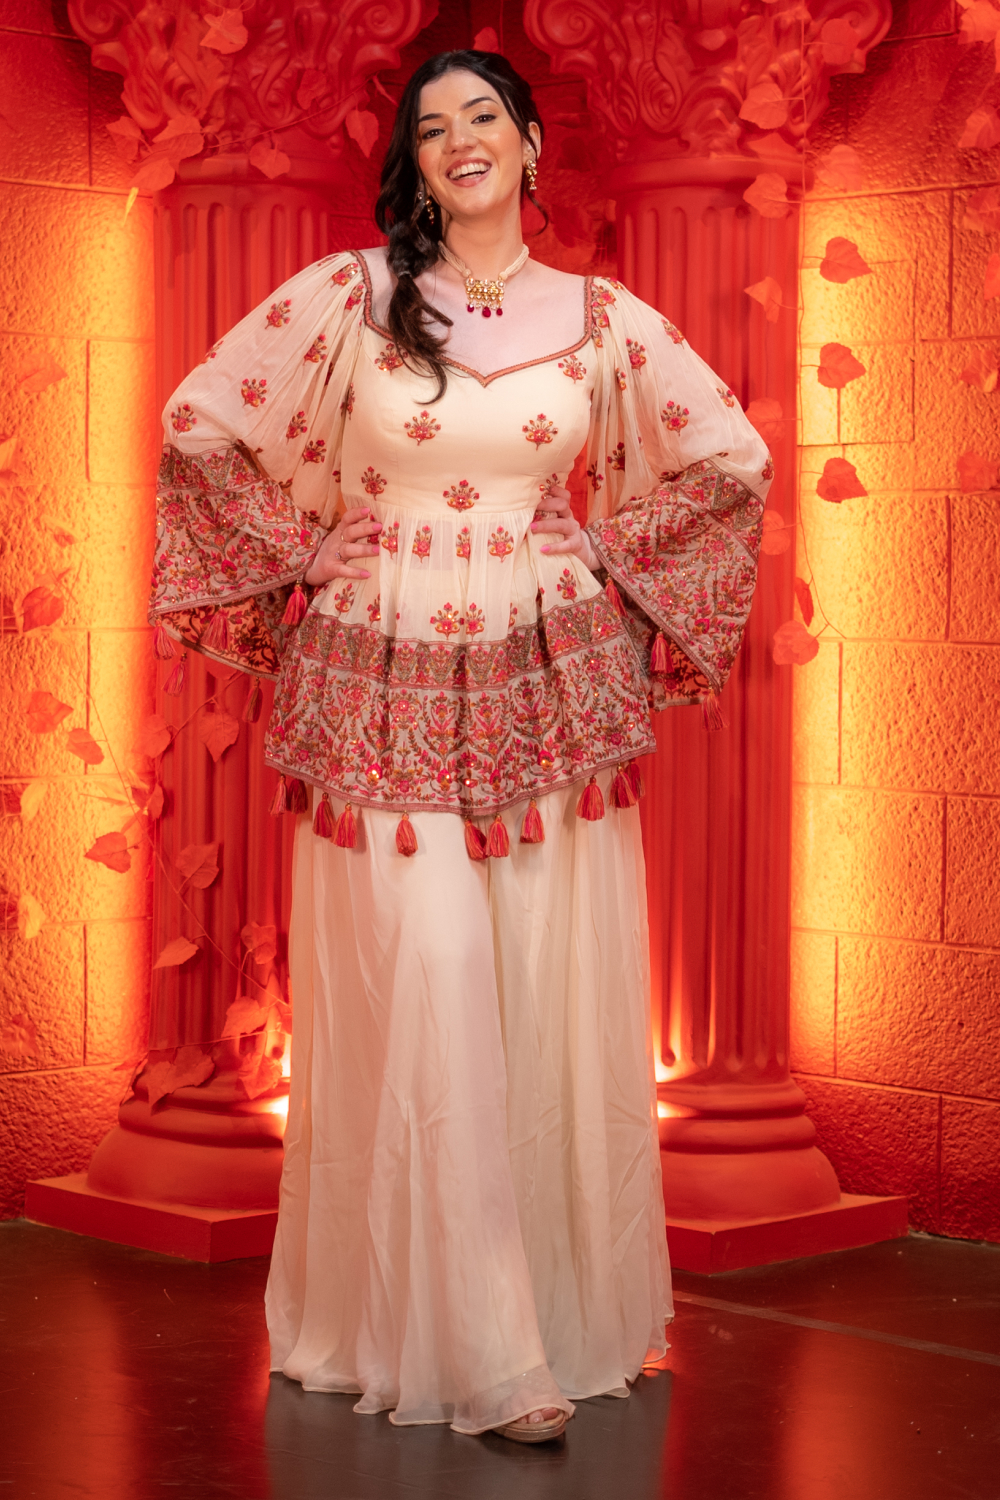 Green Peplum Top Style Lehenga Choli Lengha Skirt Top Sari Saree Indian  Lehanga | eBay